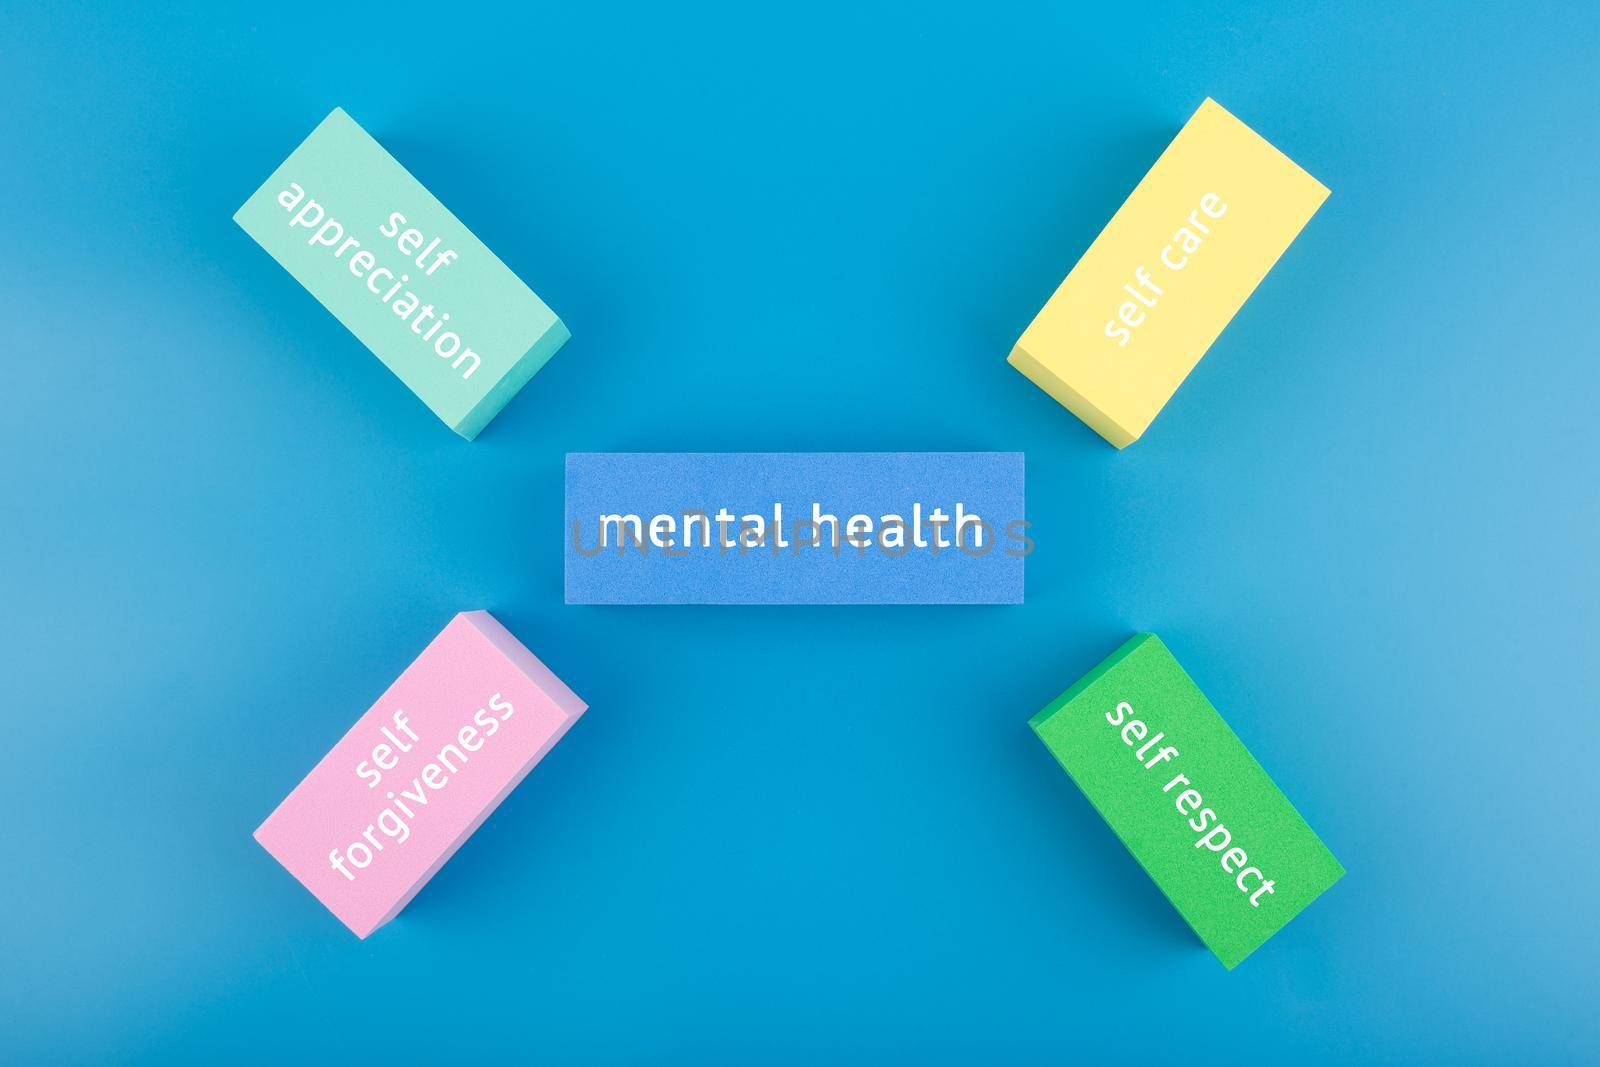 Mental health formula concept. Self appreciation, self care, self respect and self forgiveness written on multicolored rectangles on blue background by Senorina_Irina